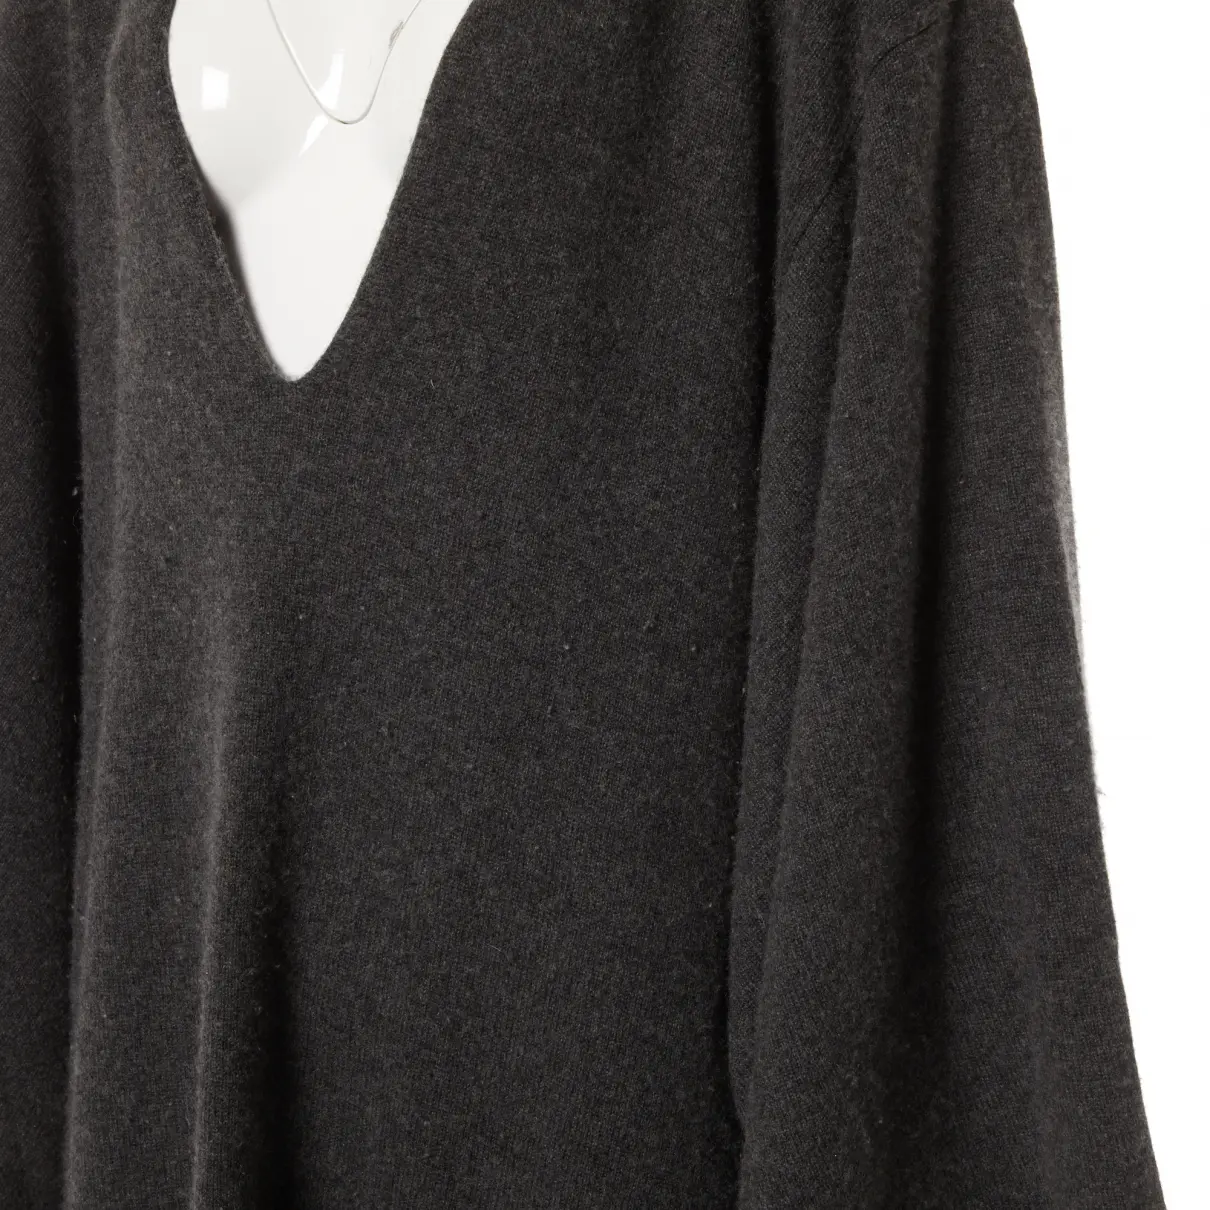 Buy Chloé Cashmere mid-length dress online